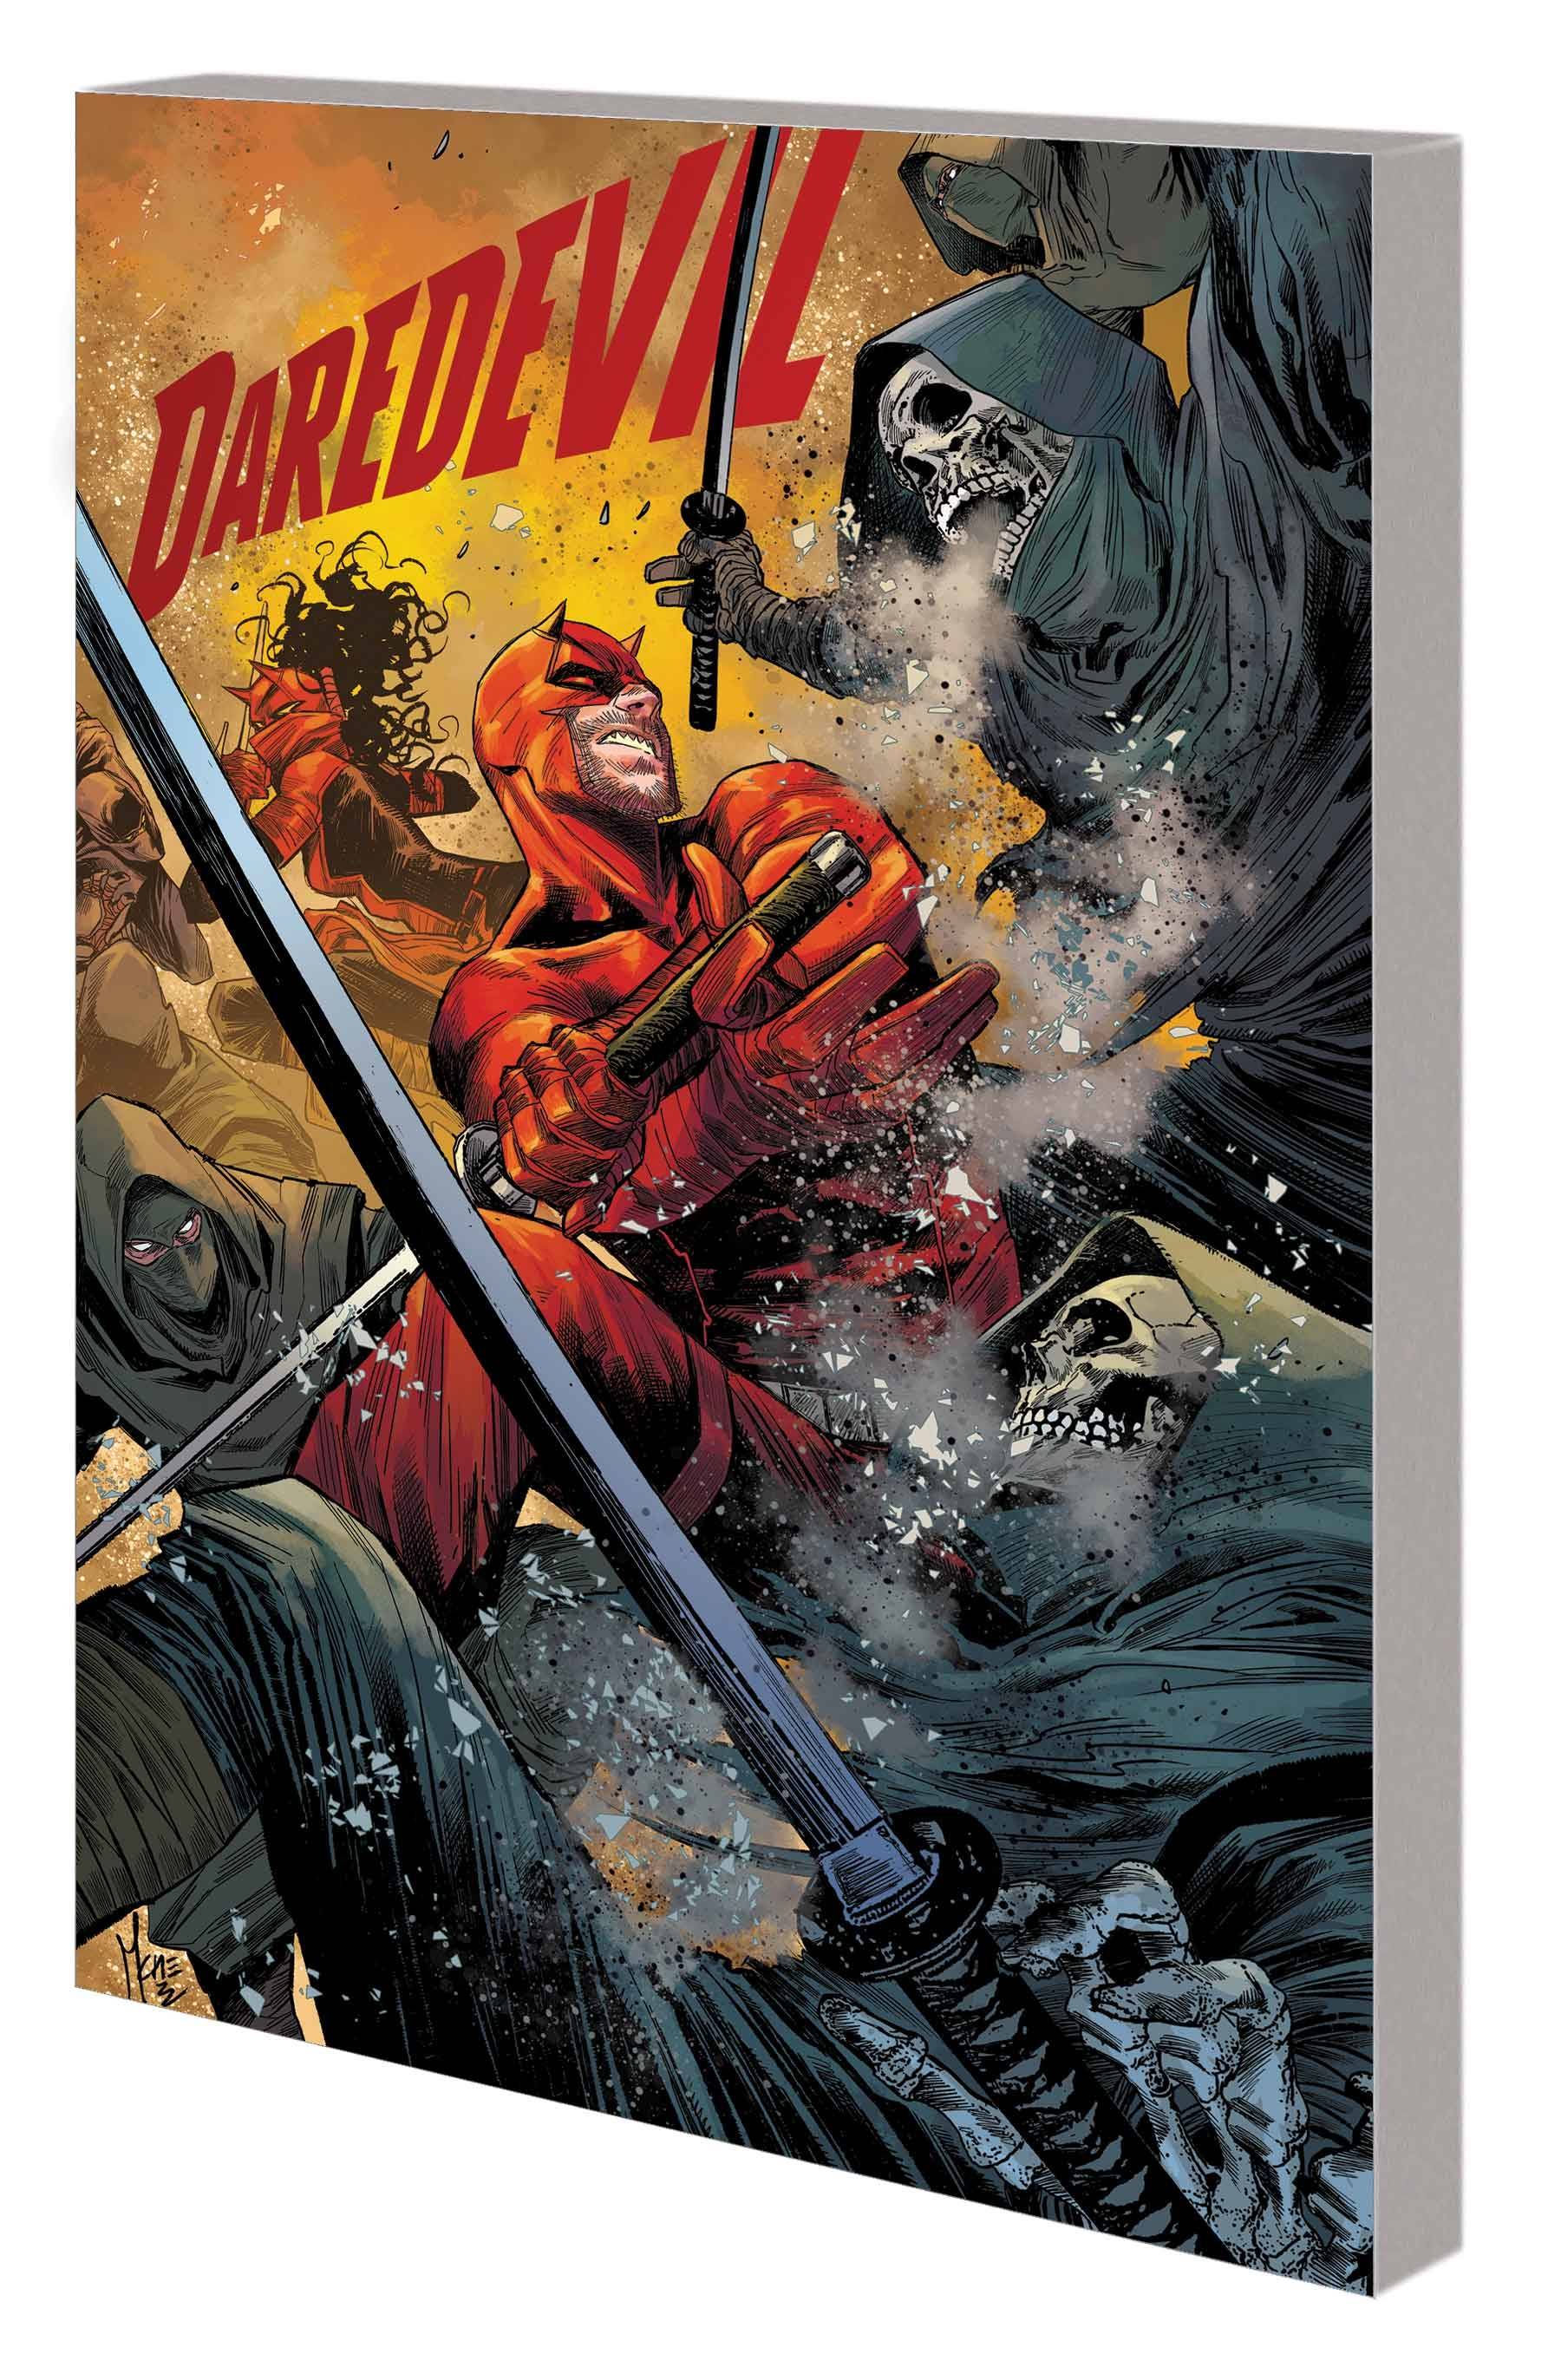 Daredevil & Elektra vol 1: The Red Fist Saga s/c